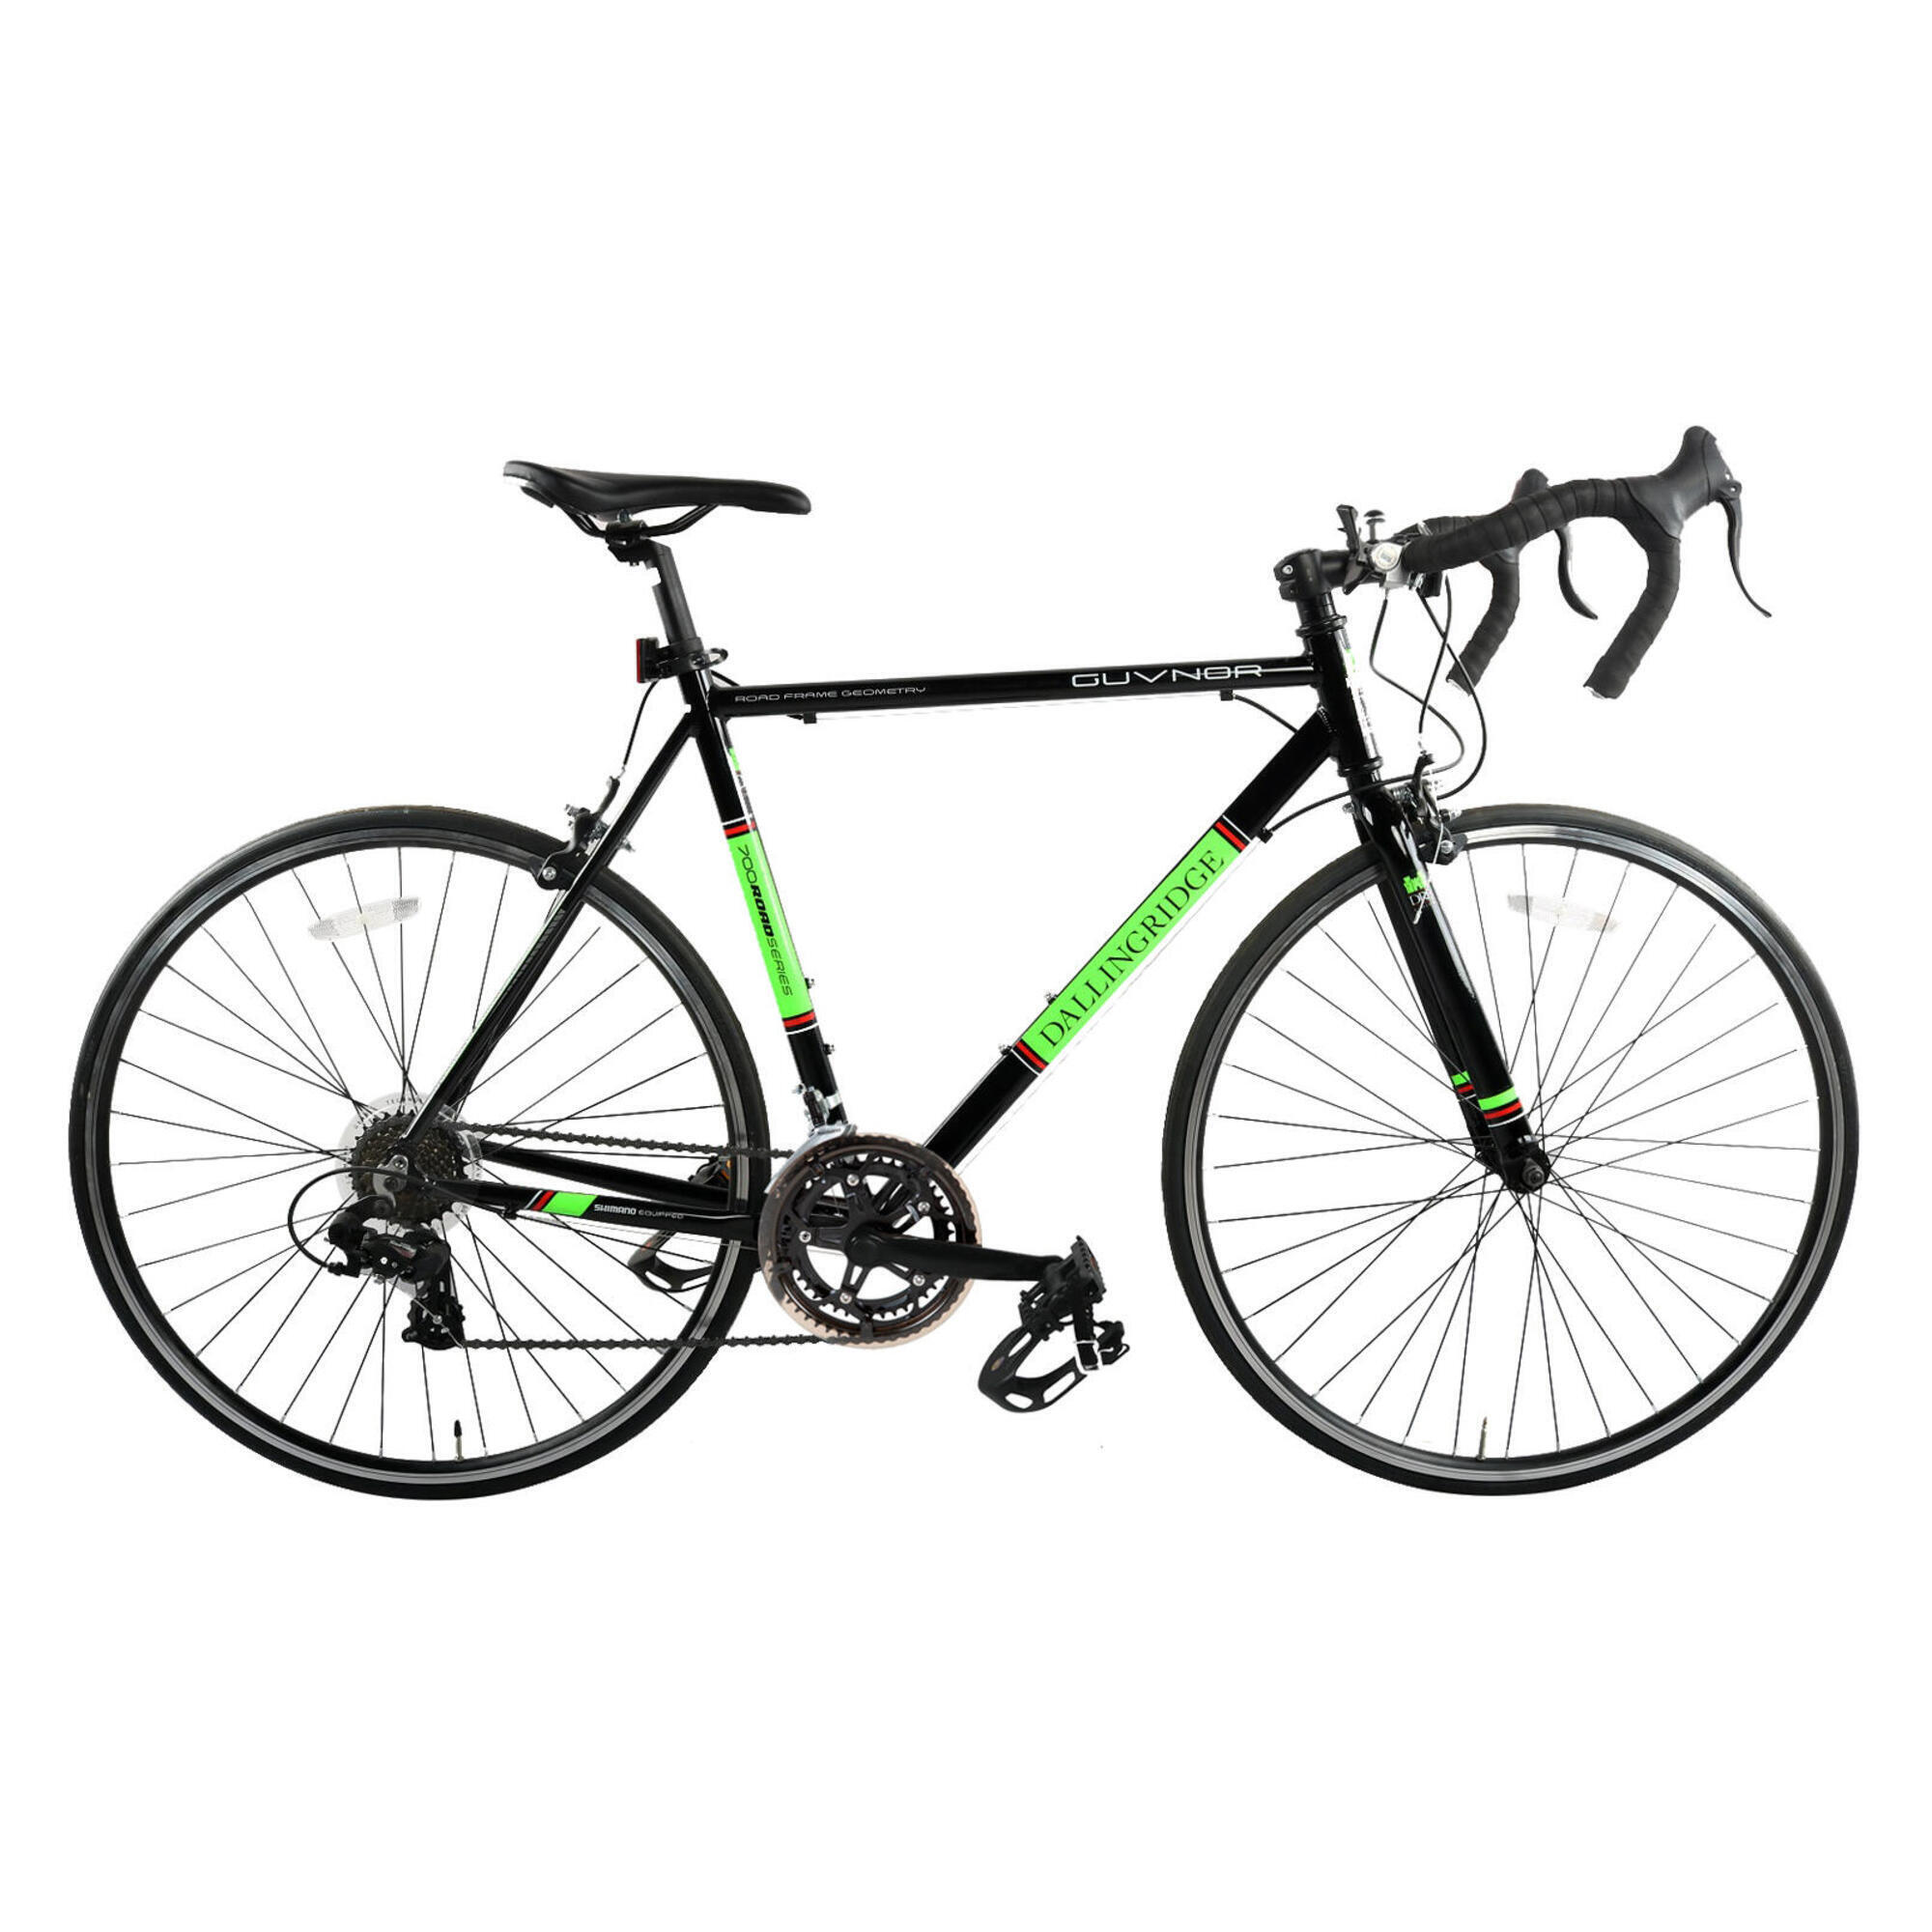 Dallingridge Guvnor Adults Road Bike, 700c Wheel - Gloss Black/Acid Green 1/1